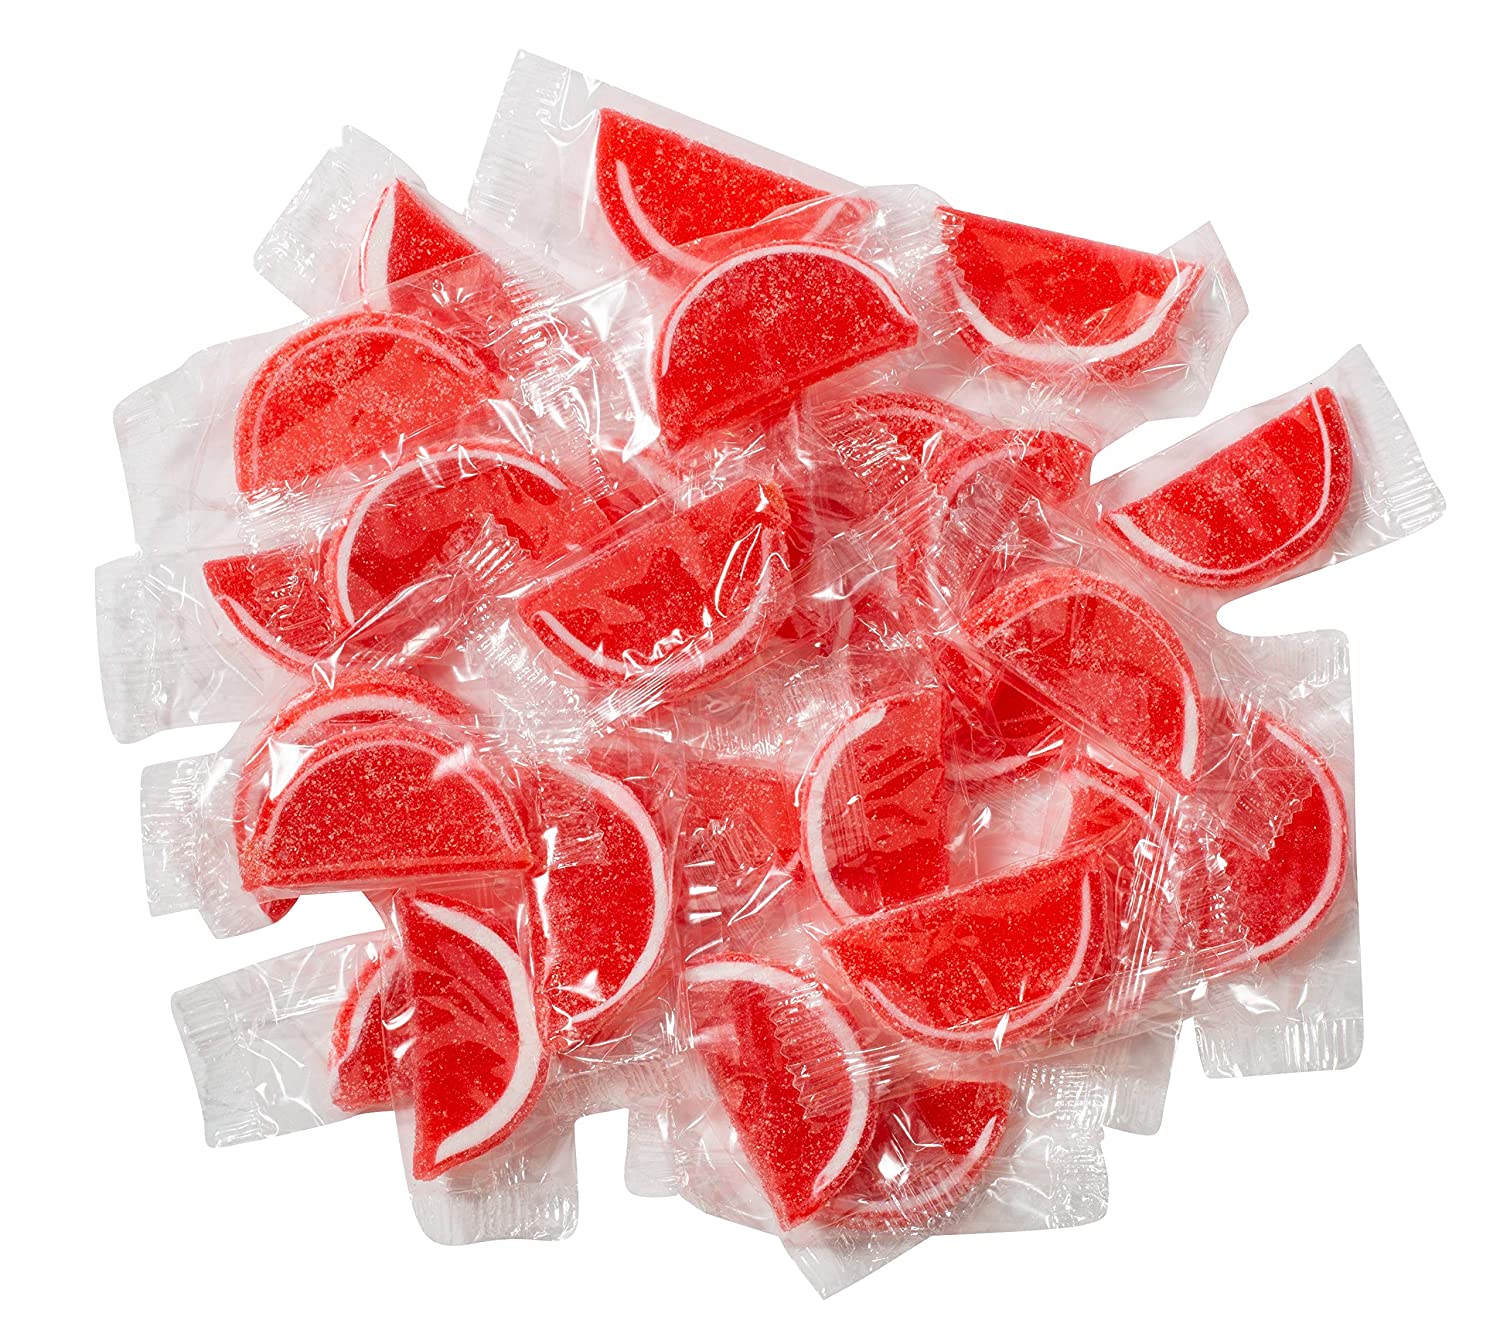 https://sugarlessdelite.com/wp-content/uploads/2022/02/1lb-Sugar-Free-Boston-Fruit-Slices-Cherry-Only-Pkg.jpg